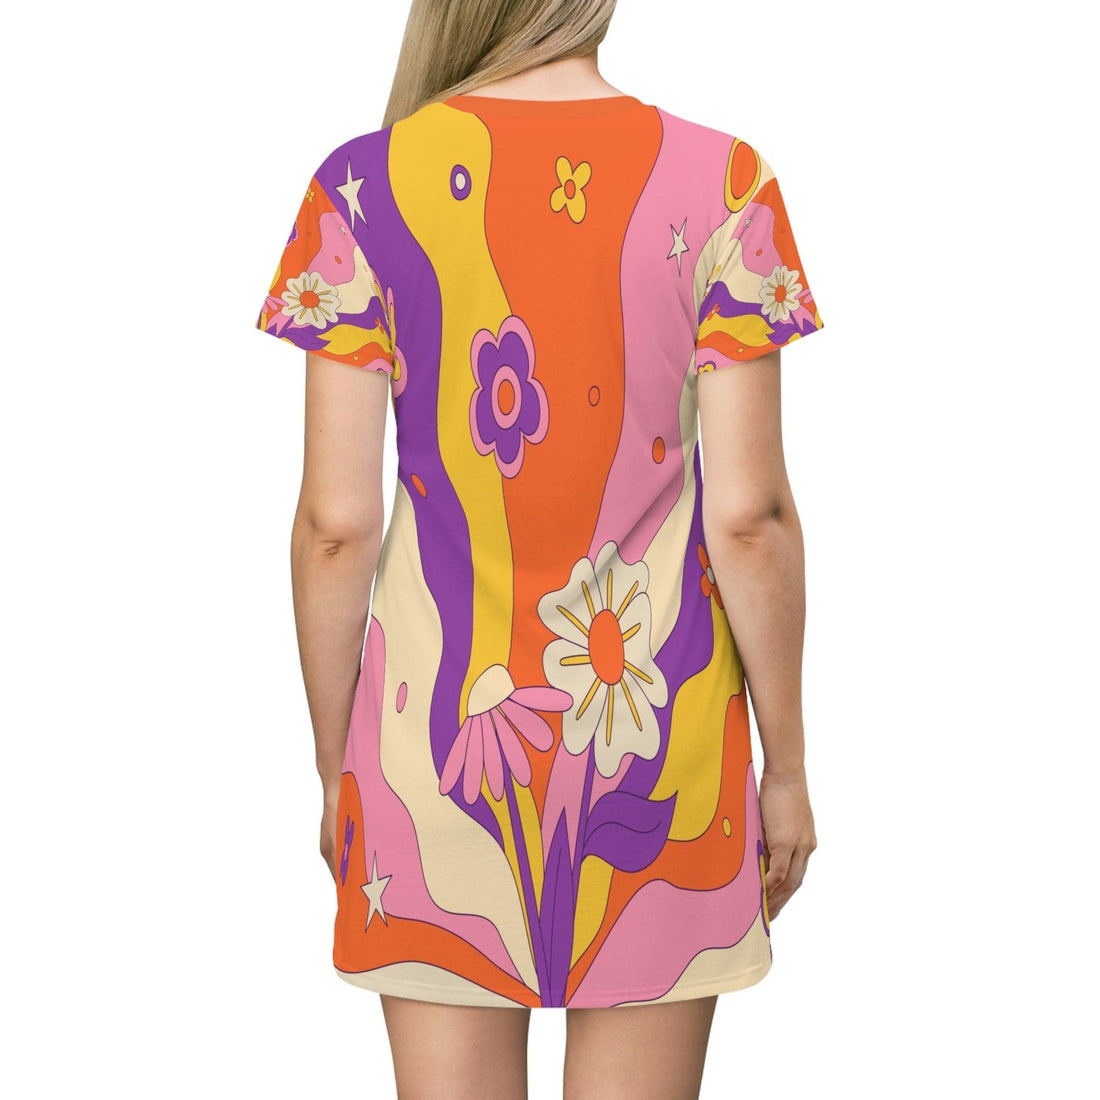 Kate McEnroe New York Retro 60s, 70s Groovy Hippie Flower Power Boho Party Dress in Mid Century Modern Beige, Burnt Orange, Mustard Yellow, Purple, PinkDresses21474881676877458734